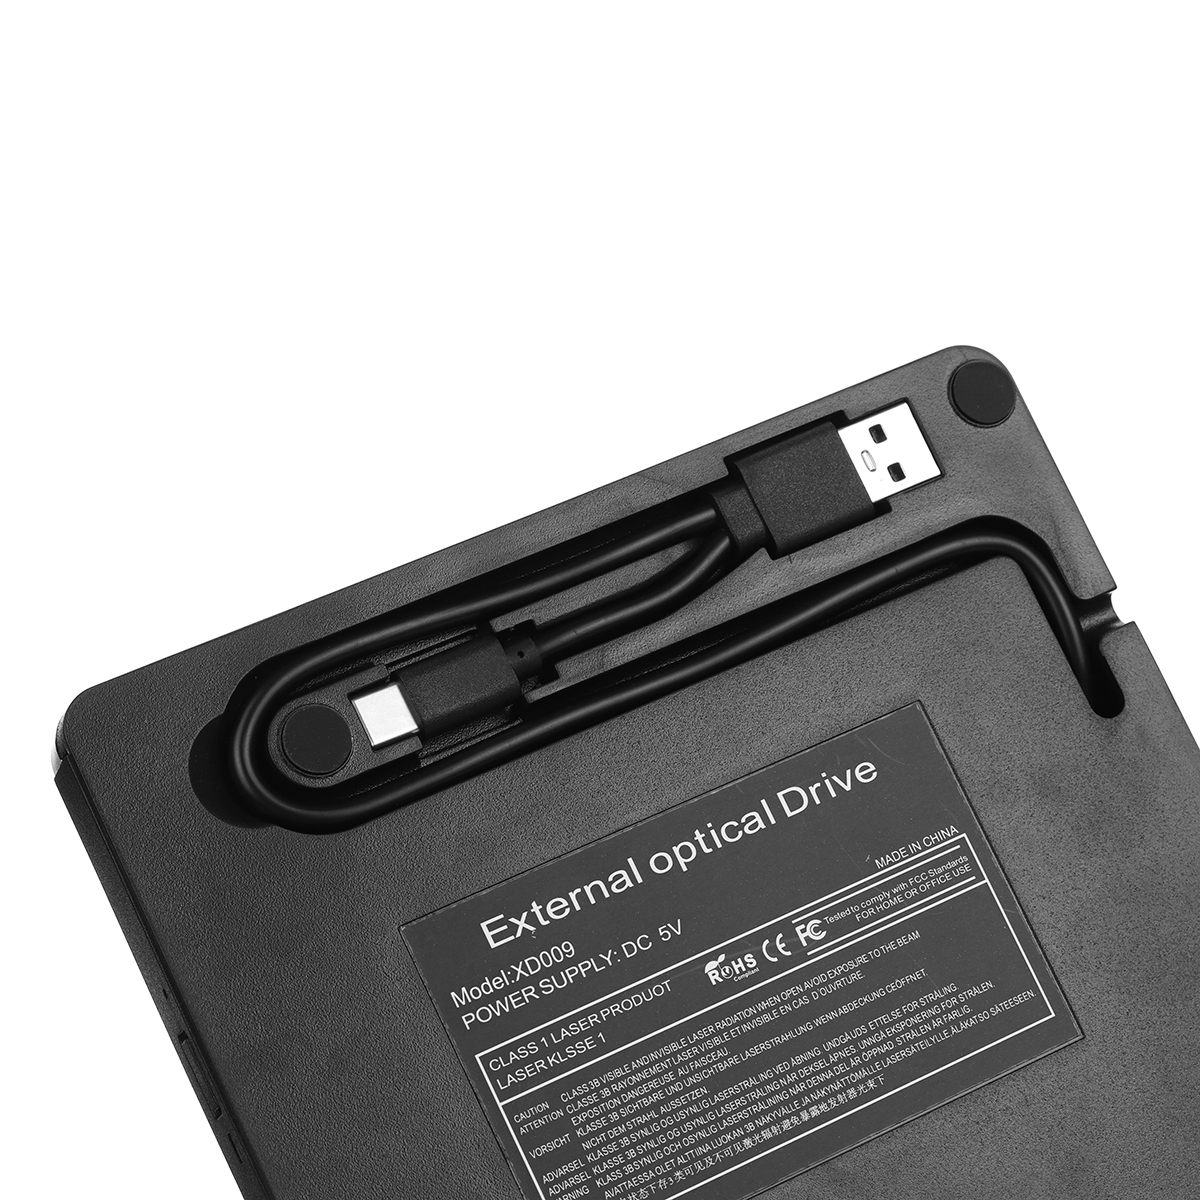 USB-30-Type-C-External-Optical-Drive-DVD-RW-Player-CD-DVD-Burner-Writer-Rewriter-Data-Transfer-for-P-1753035-15